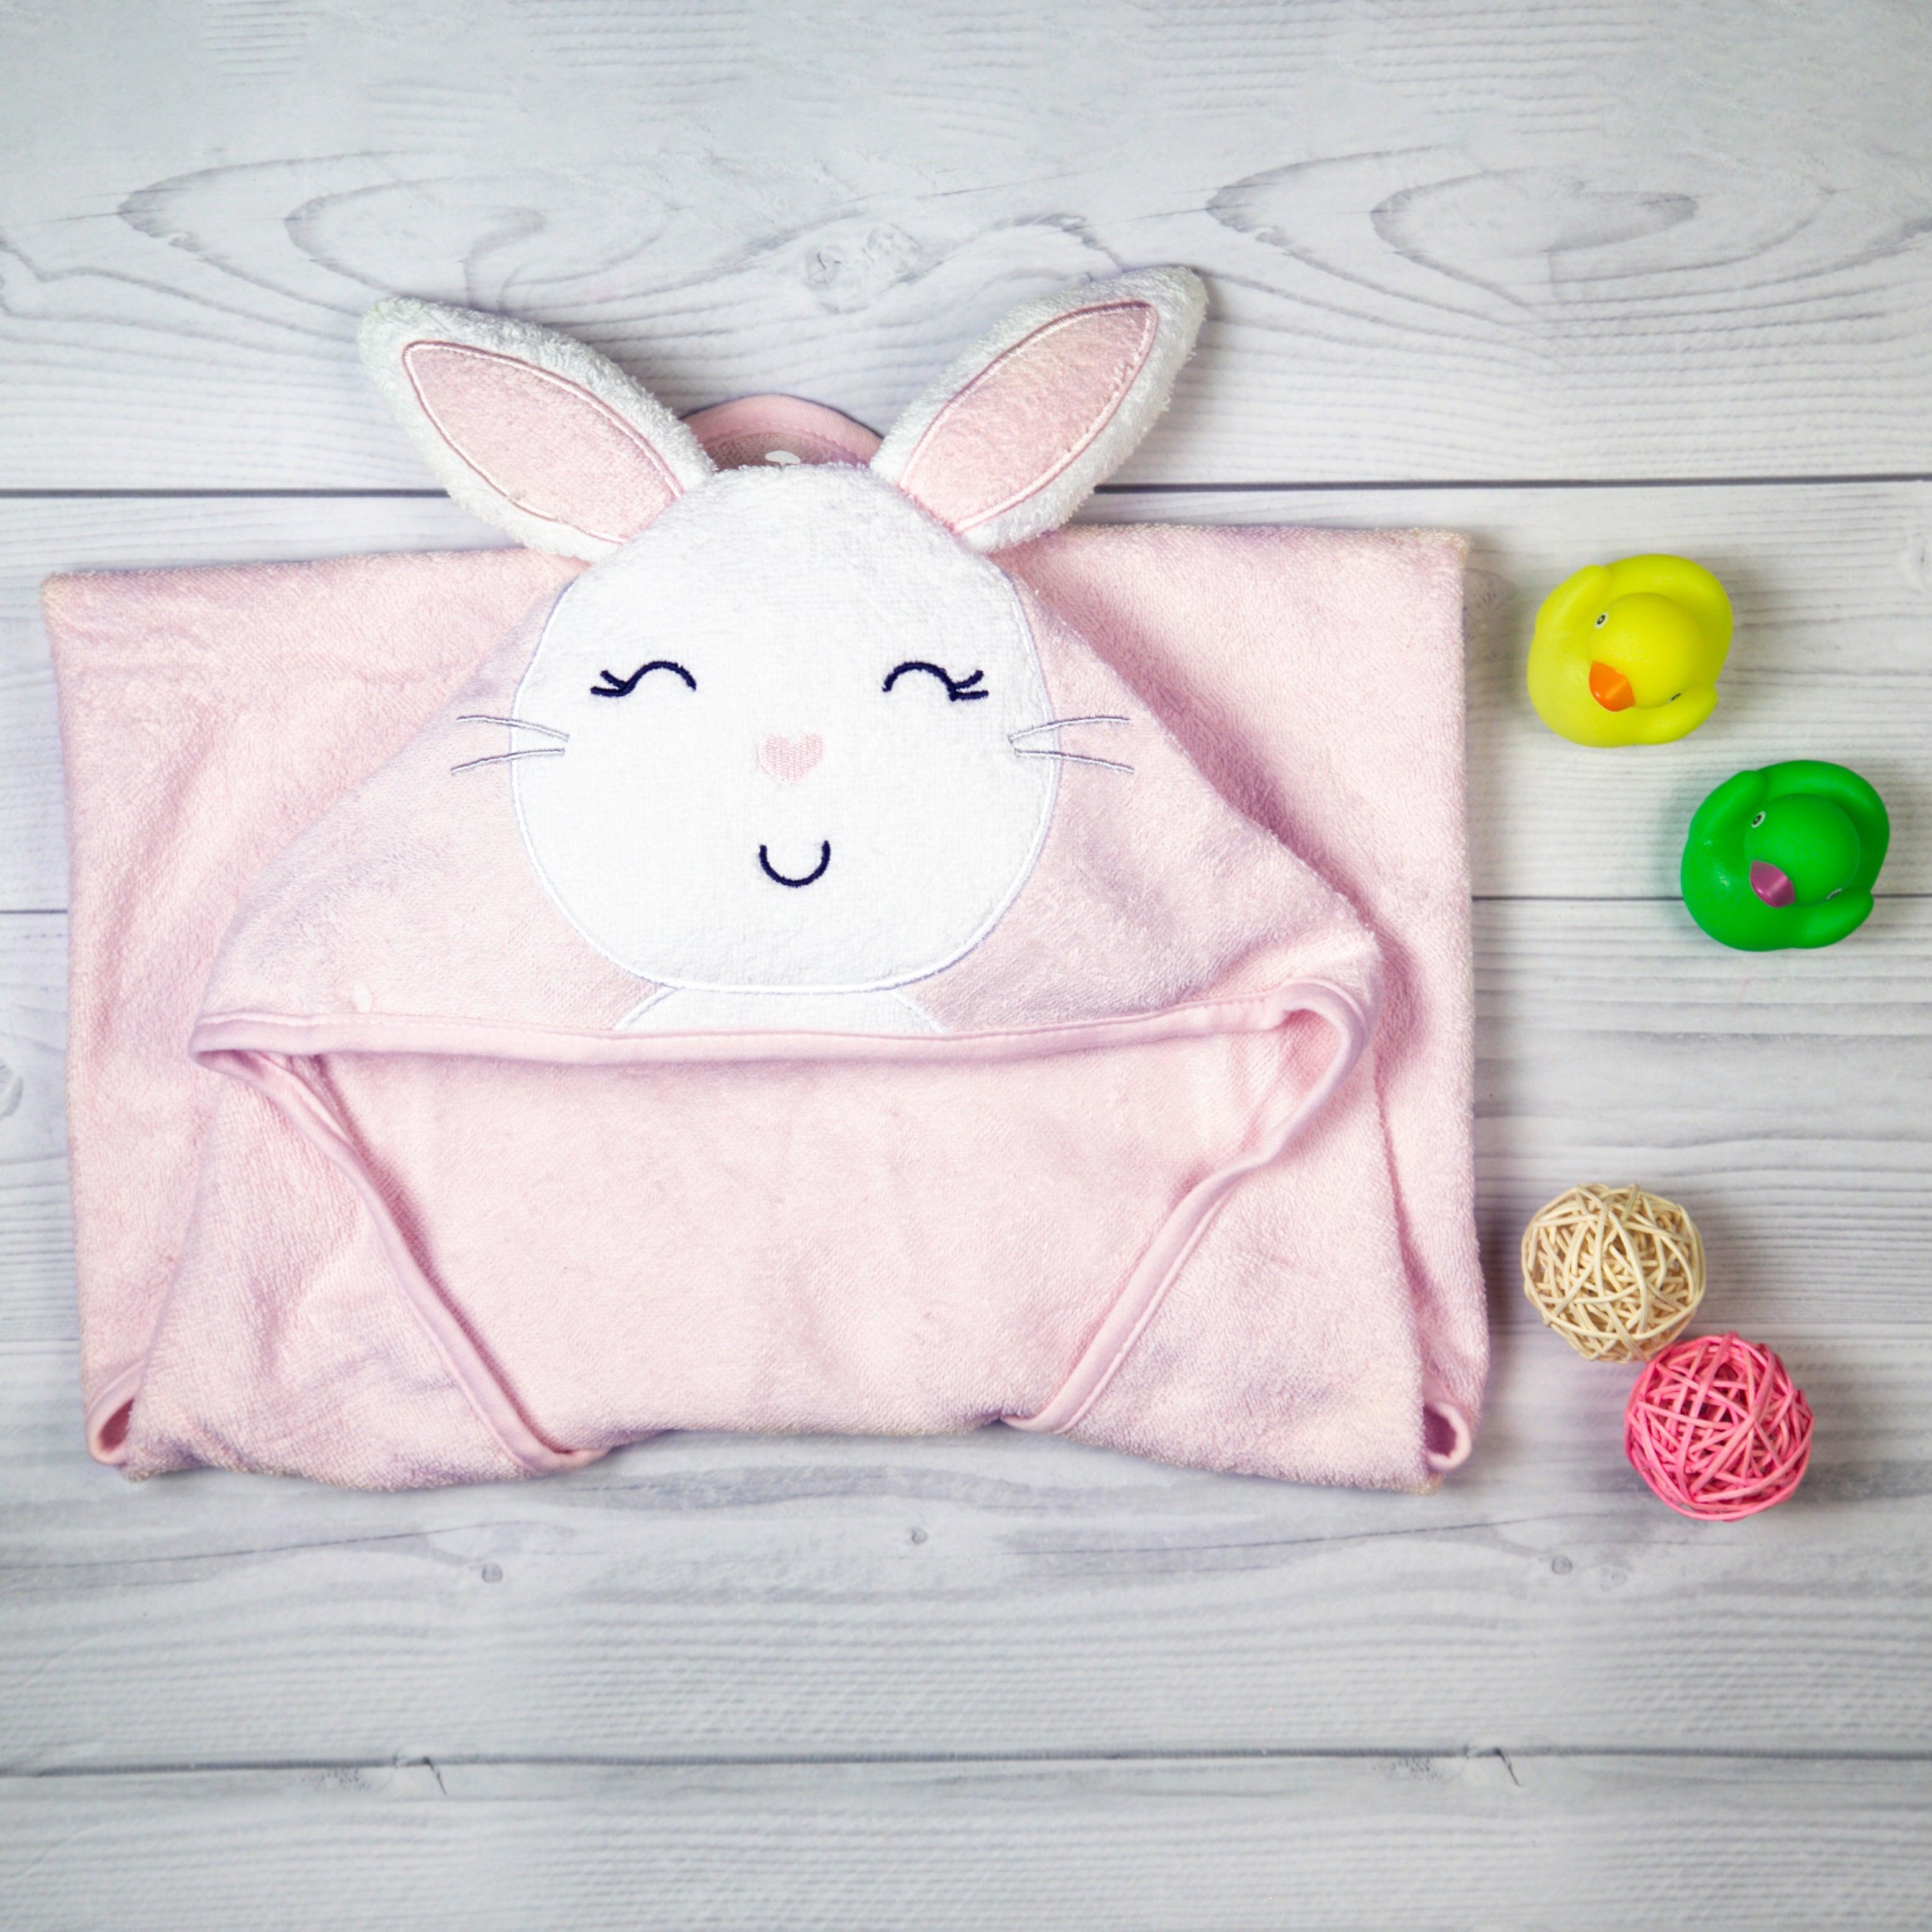 Cute Bunny Pink Animal Hooded Towel - Baby Moo